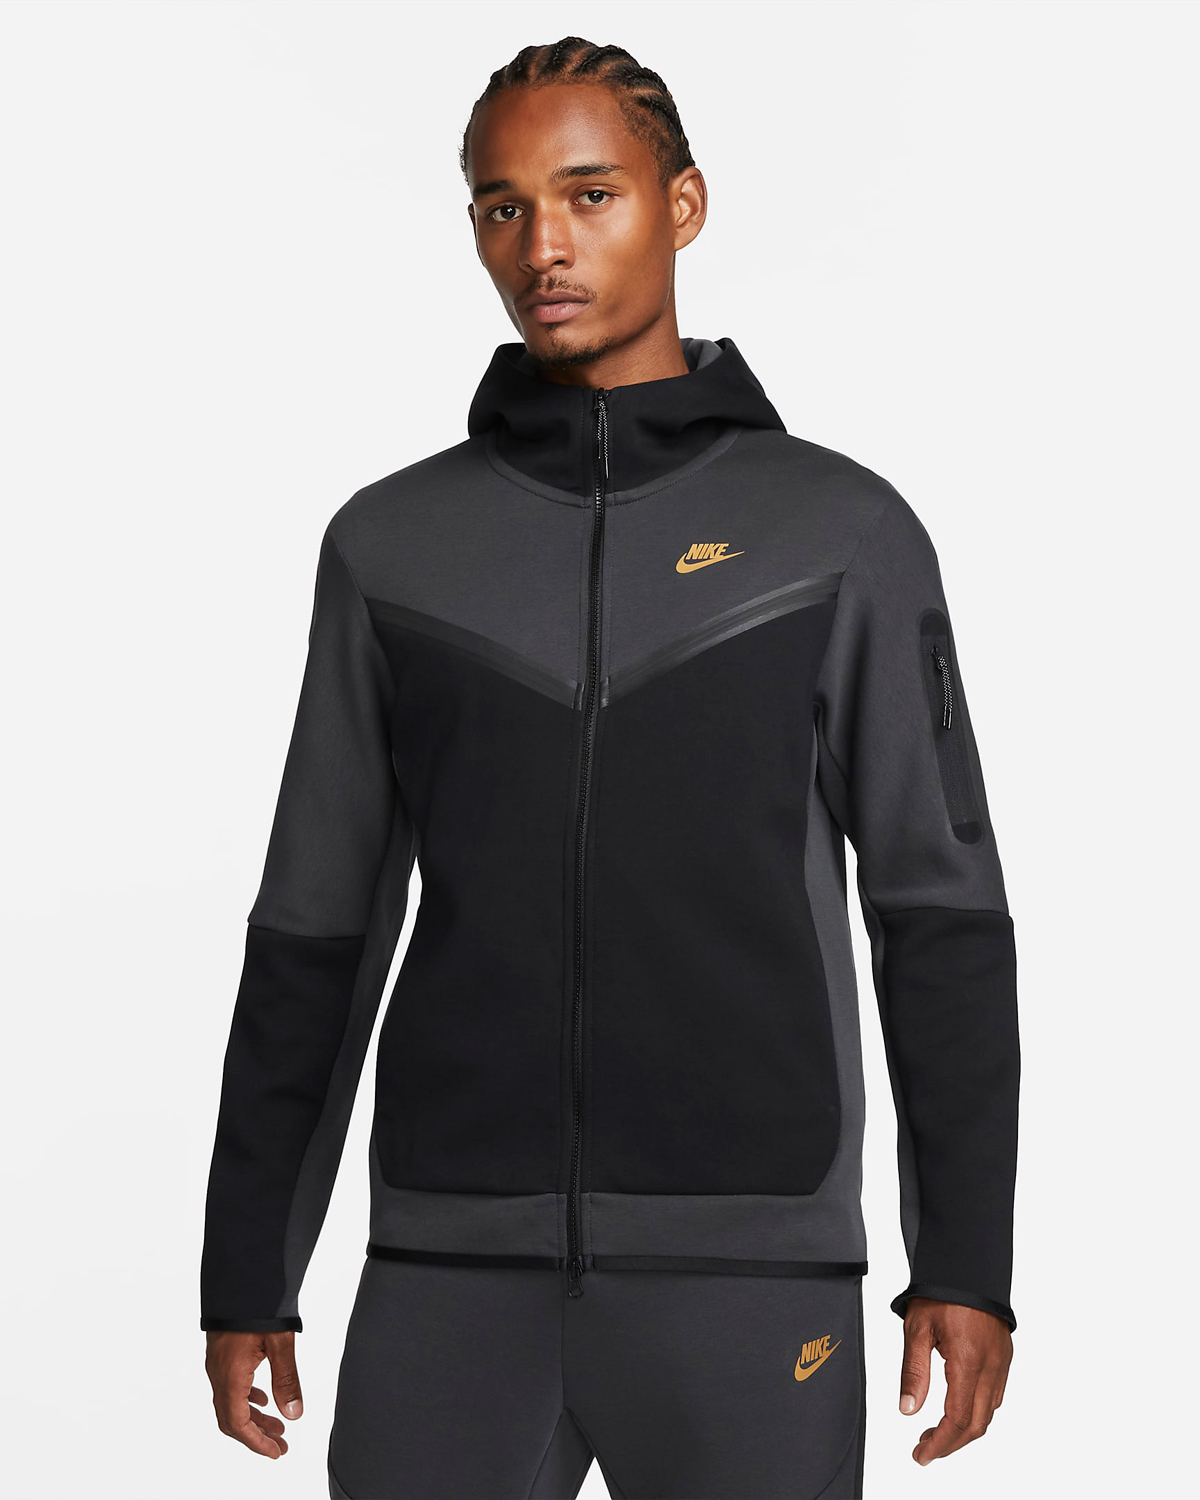 Nike-Tech-Fleece-Full-Zip-Hoodie-Black-Gold